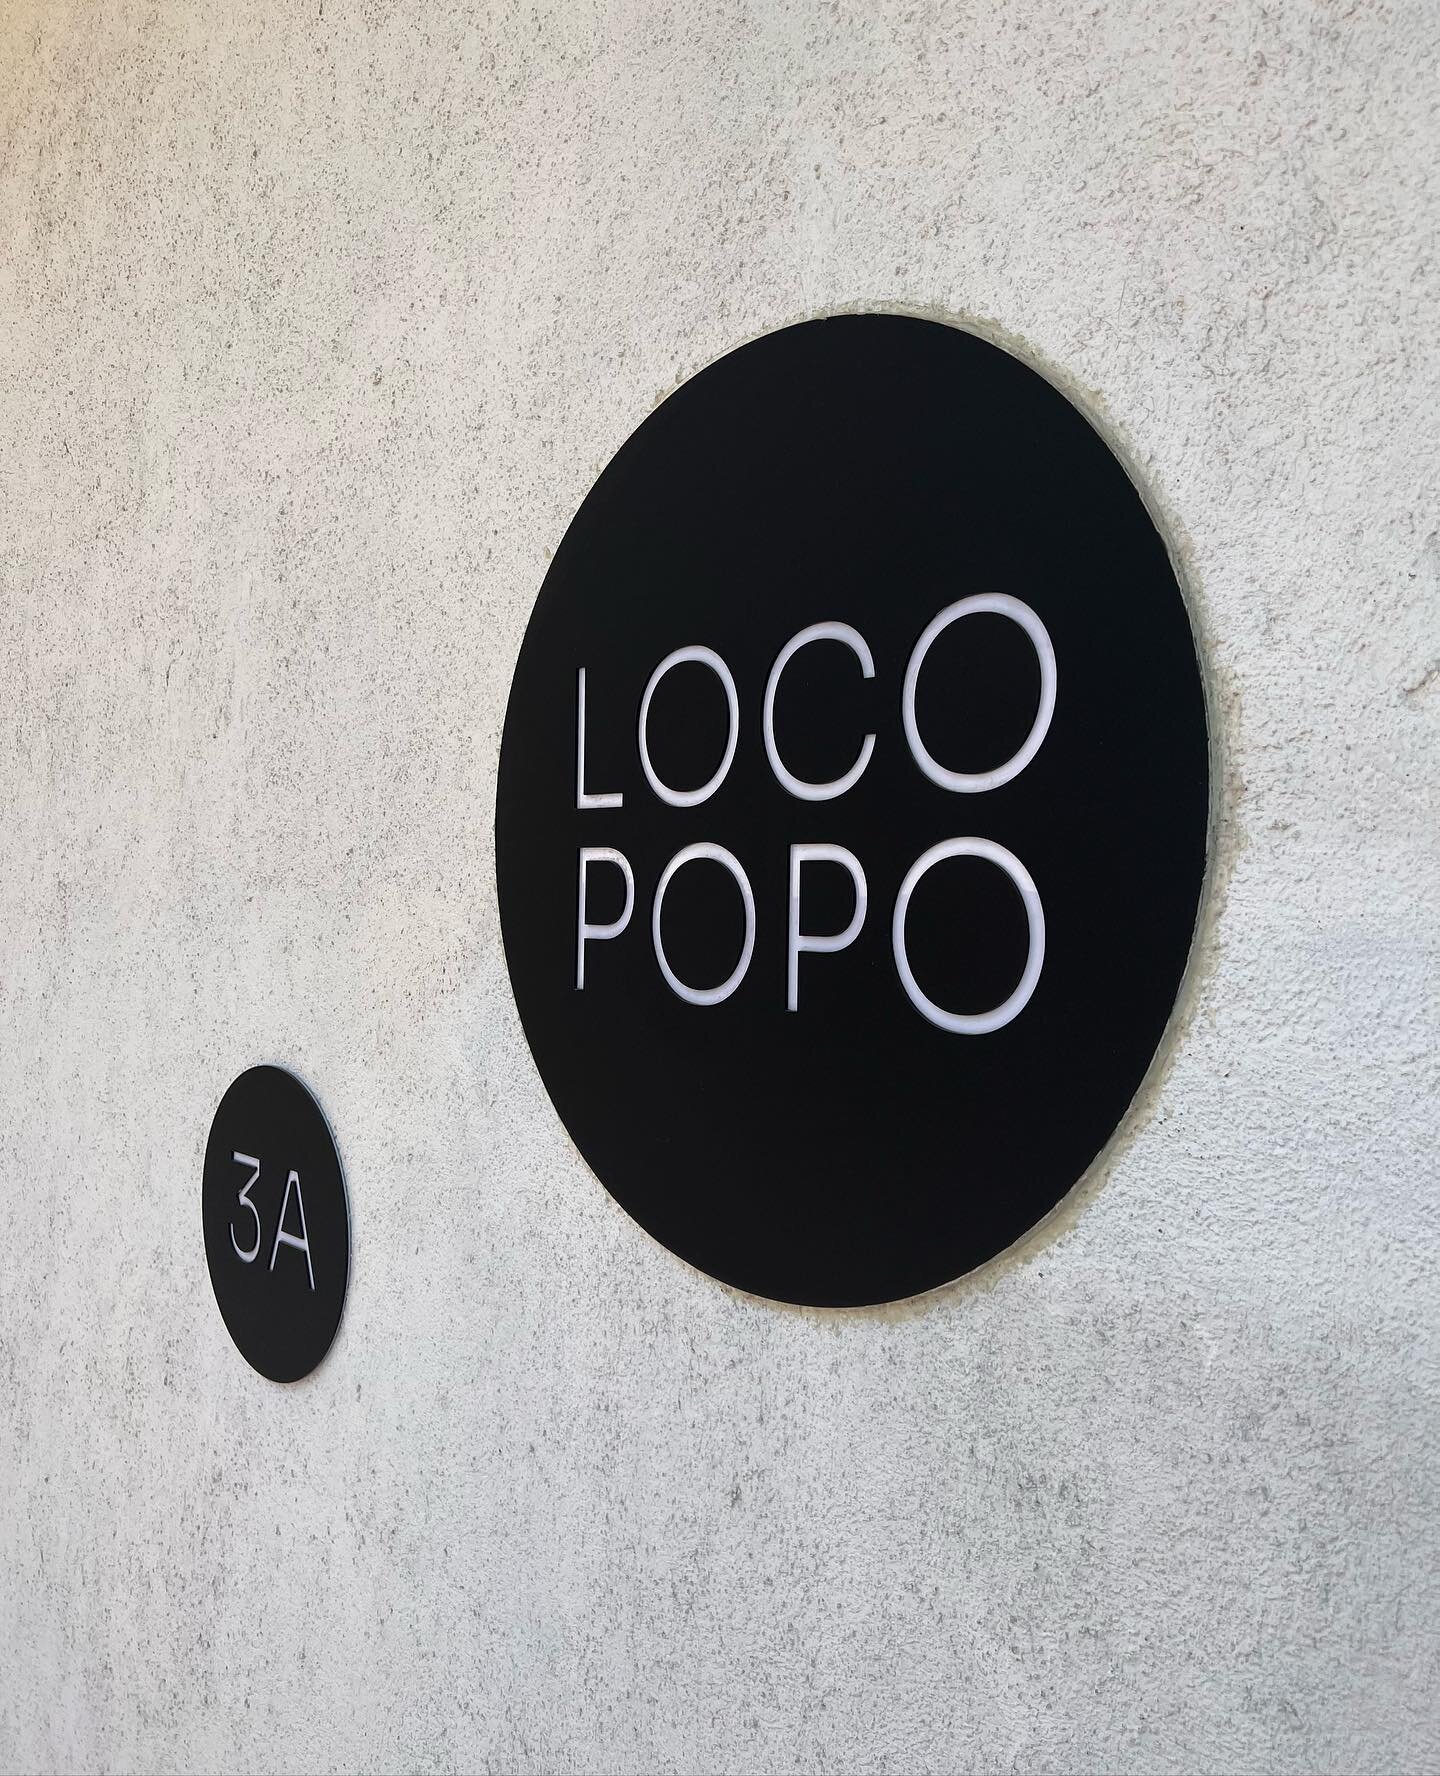 Finally The New @locopopostudio headquarters! At Kurla.